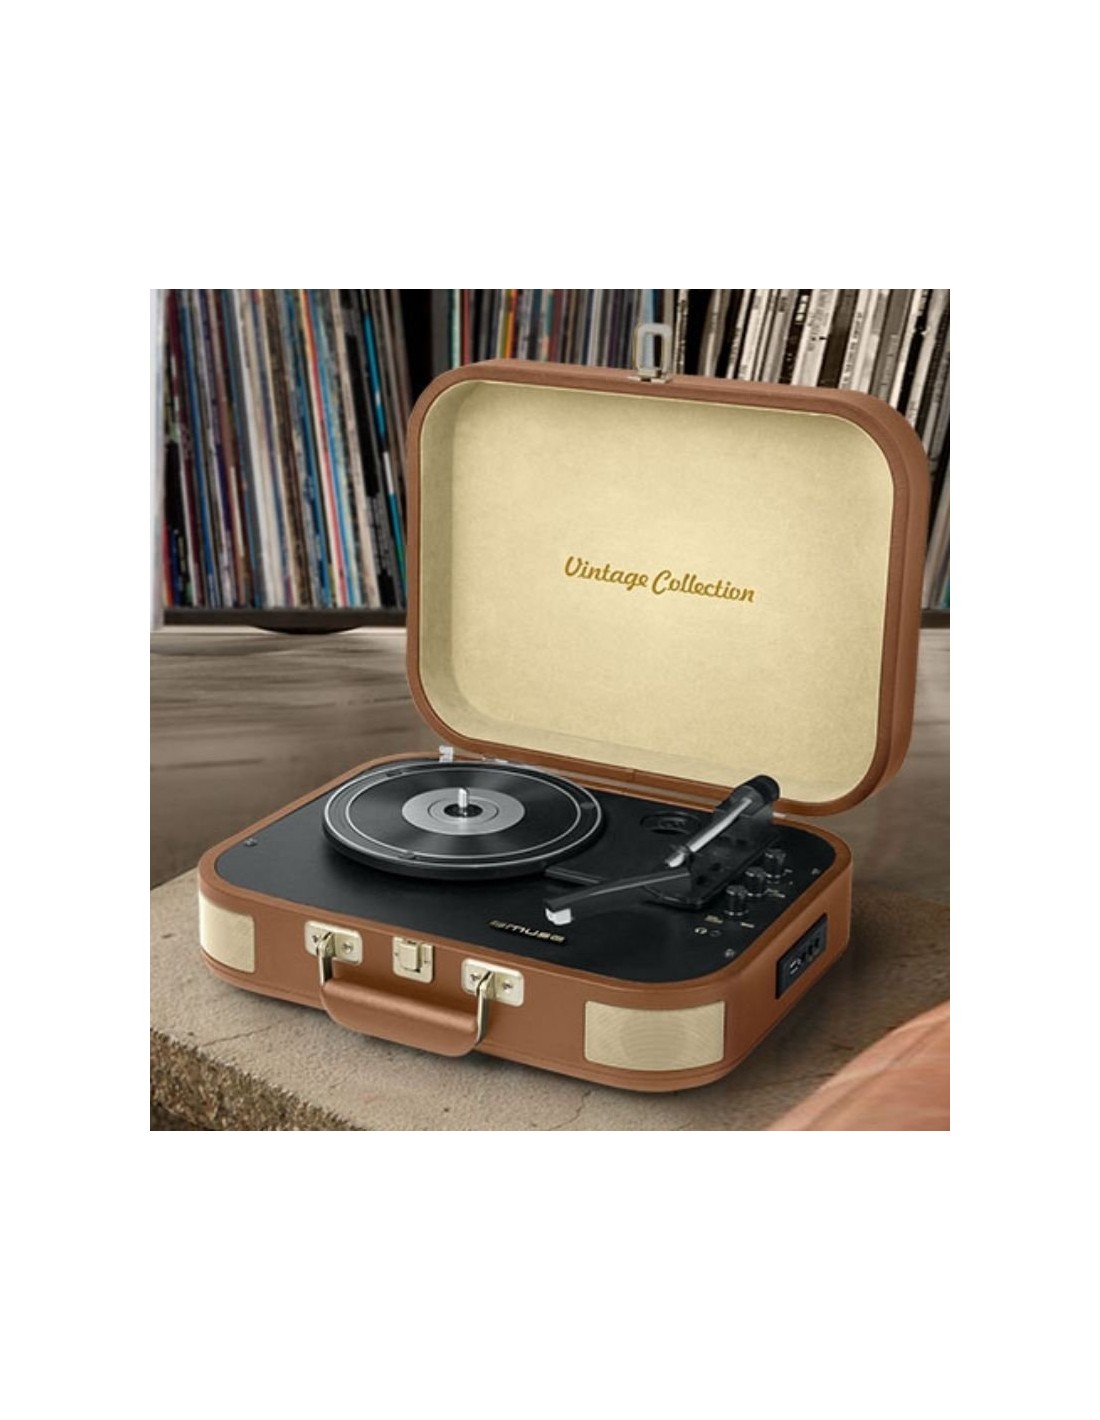 Muse - Platine Vinyl - AudioTechnica